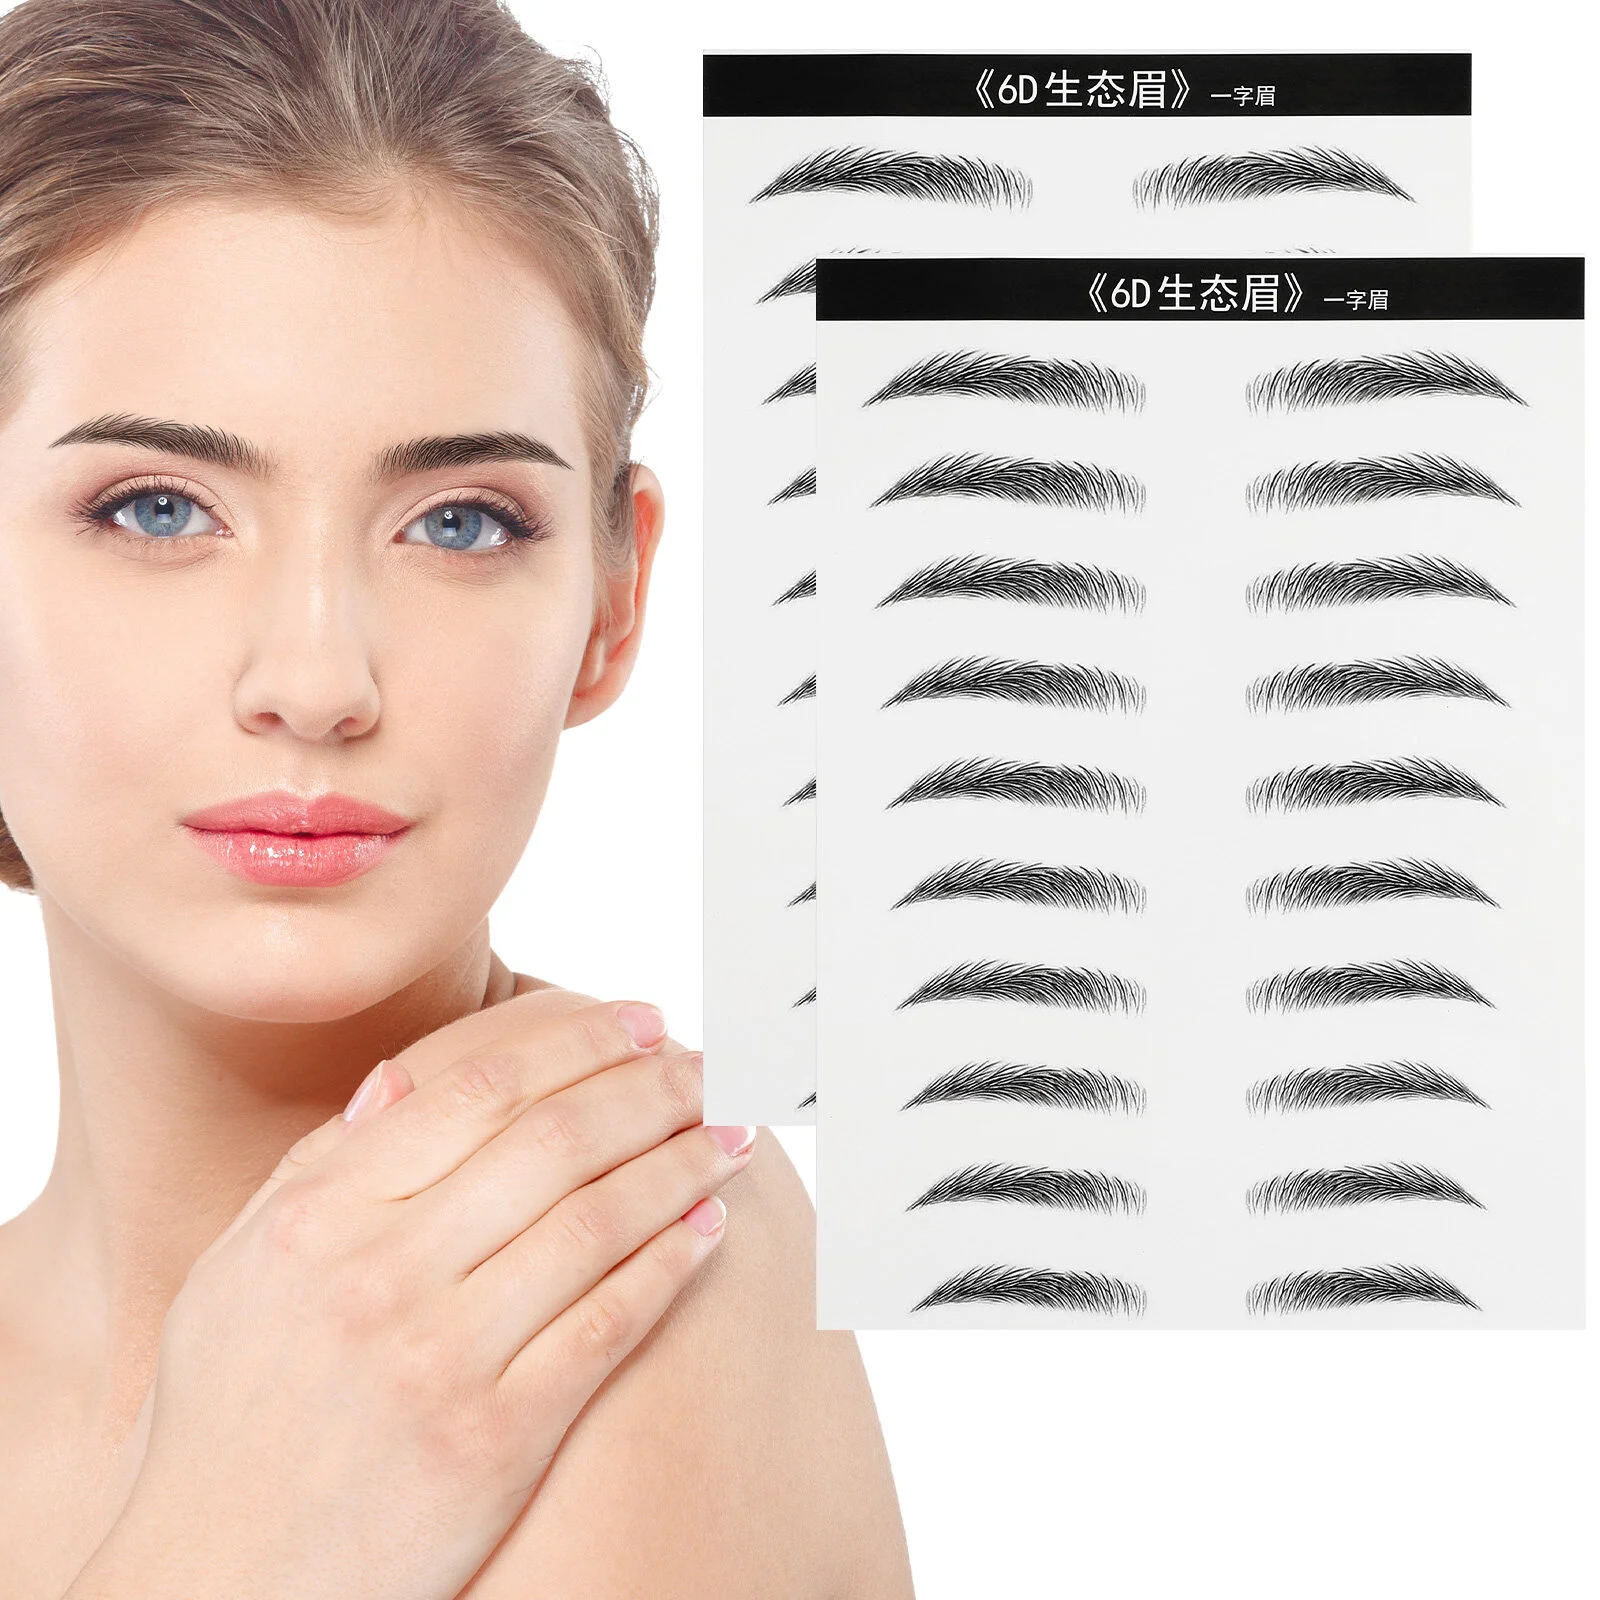 

20 Pairs Eyebrow Stickers Simulation Eyebrow Tattoos for Eyebrow Grooming Shaping